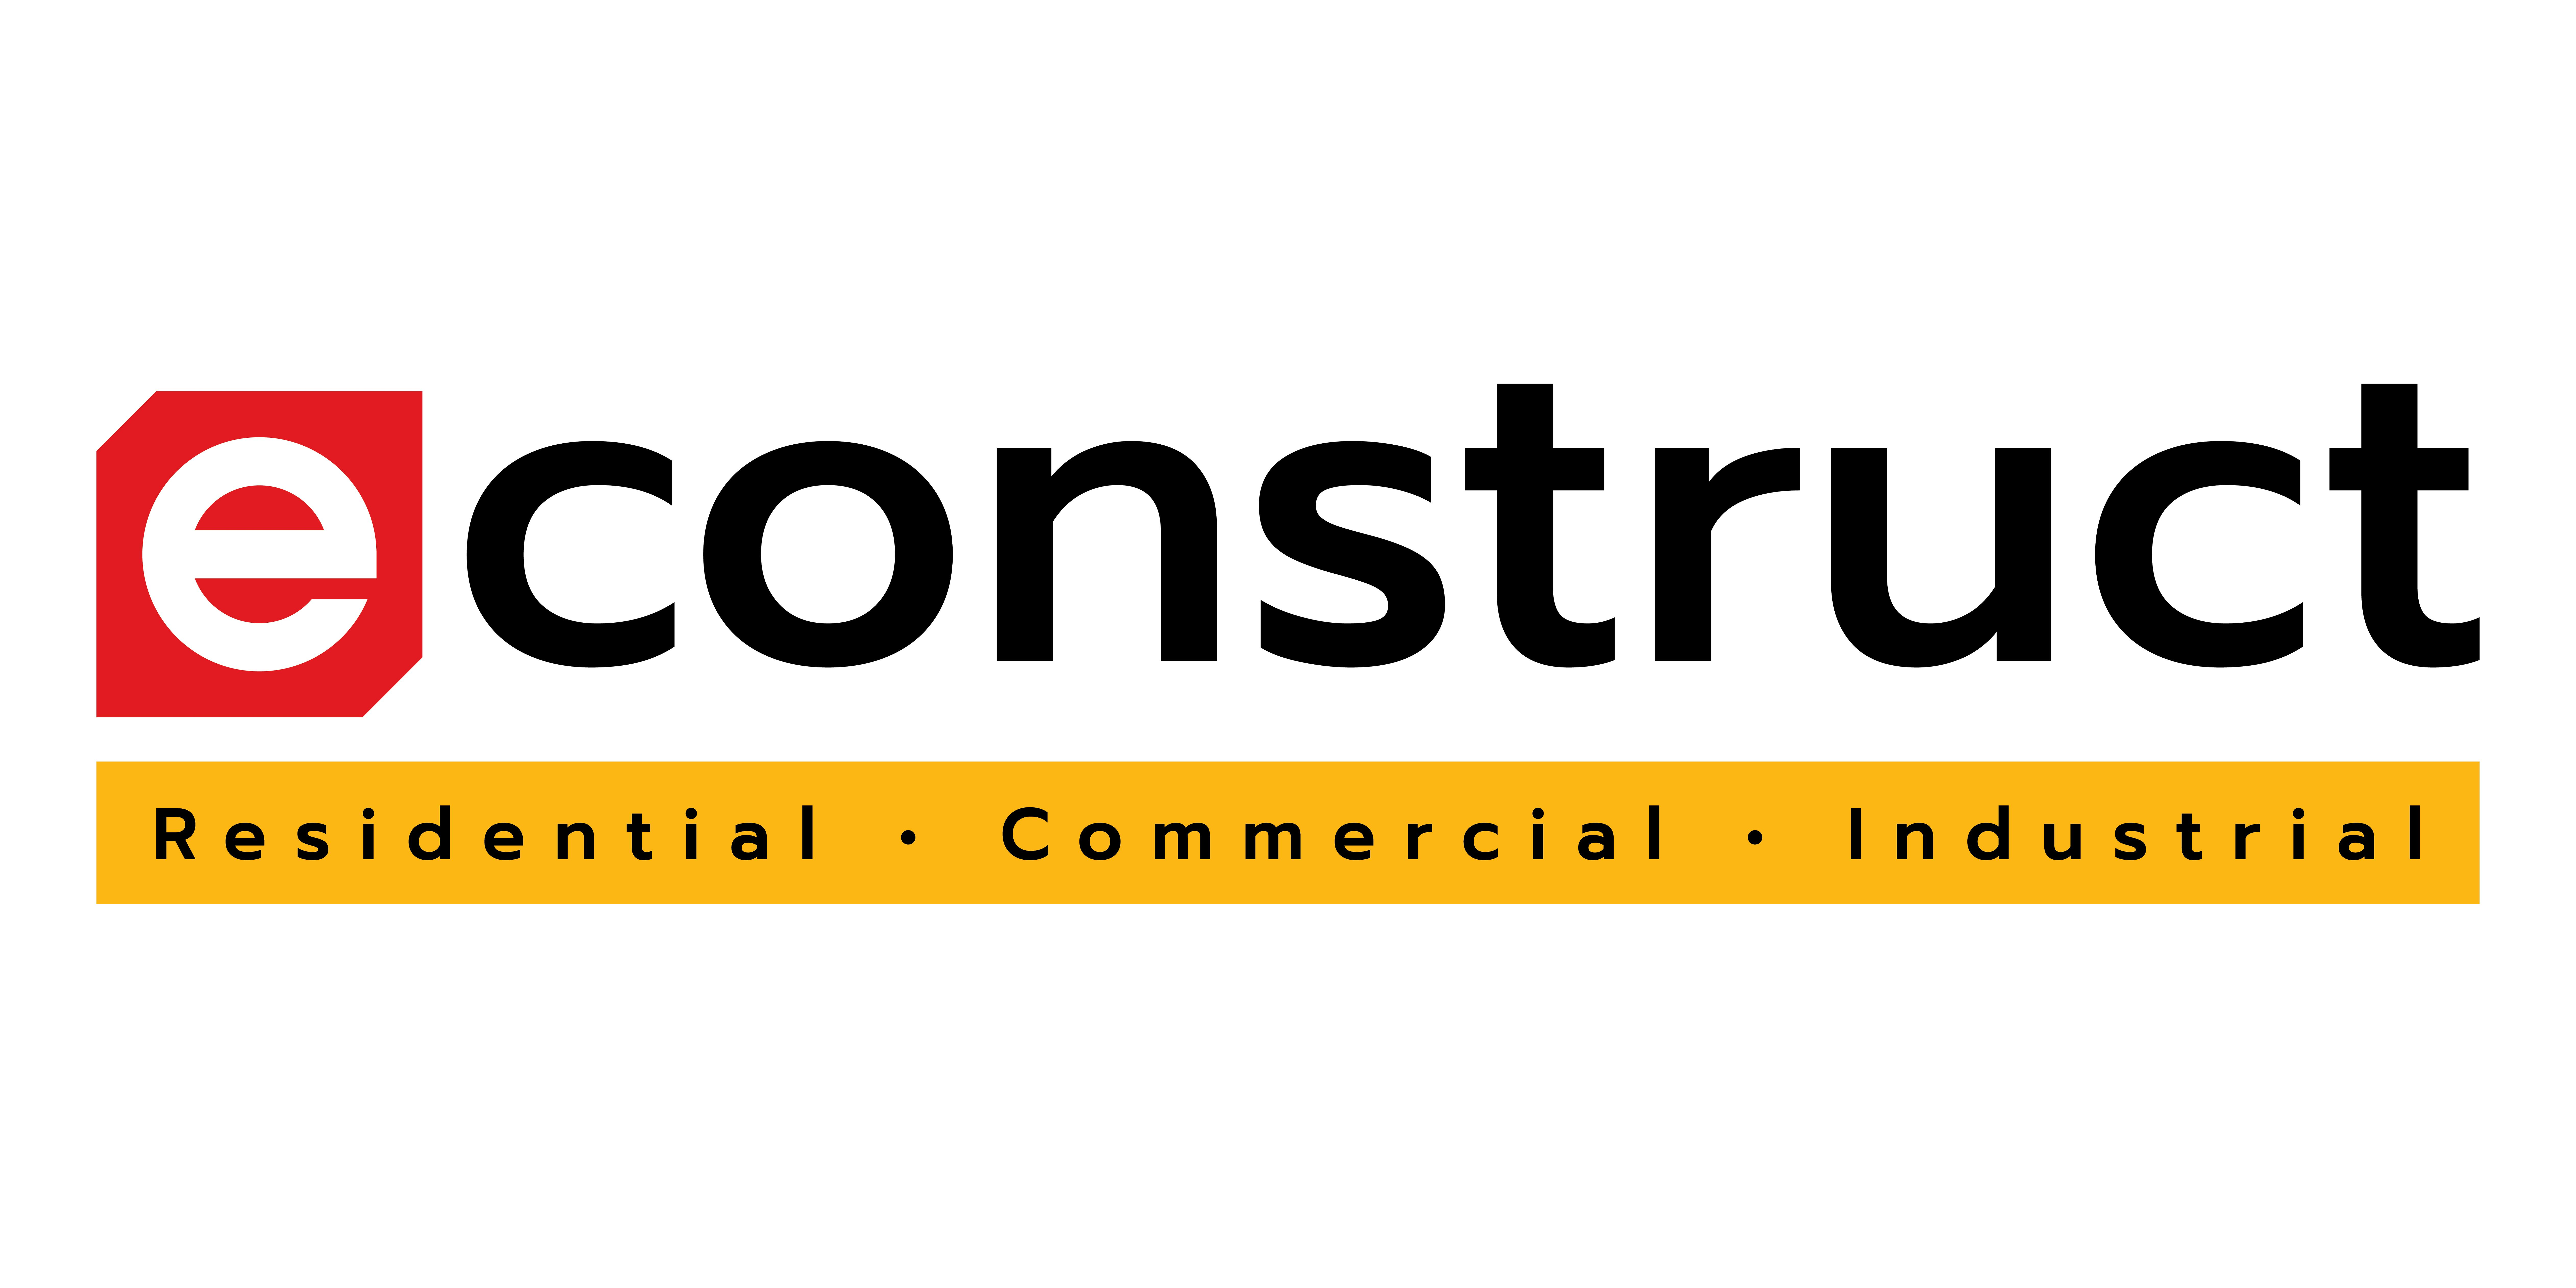 econstruct, Inc.